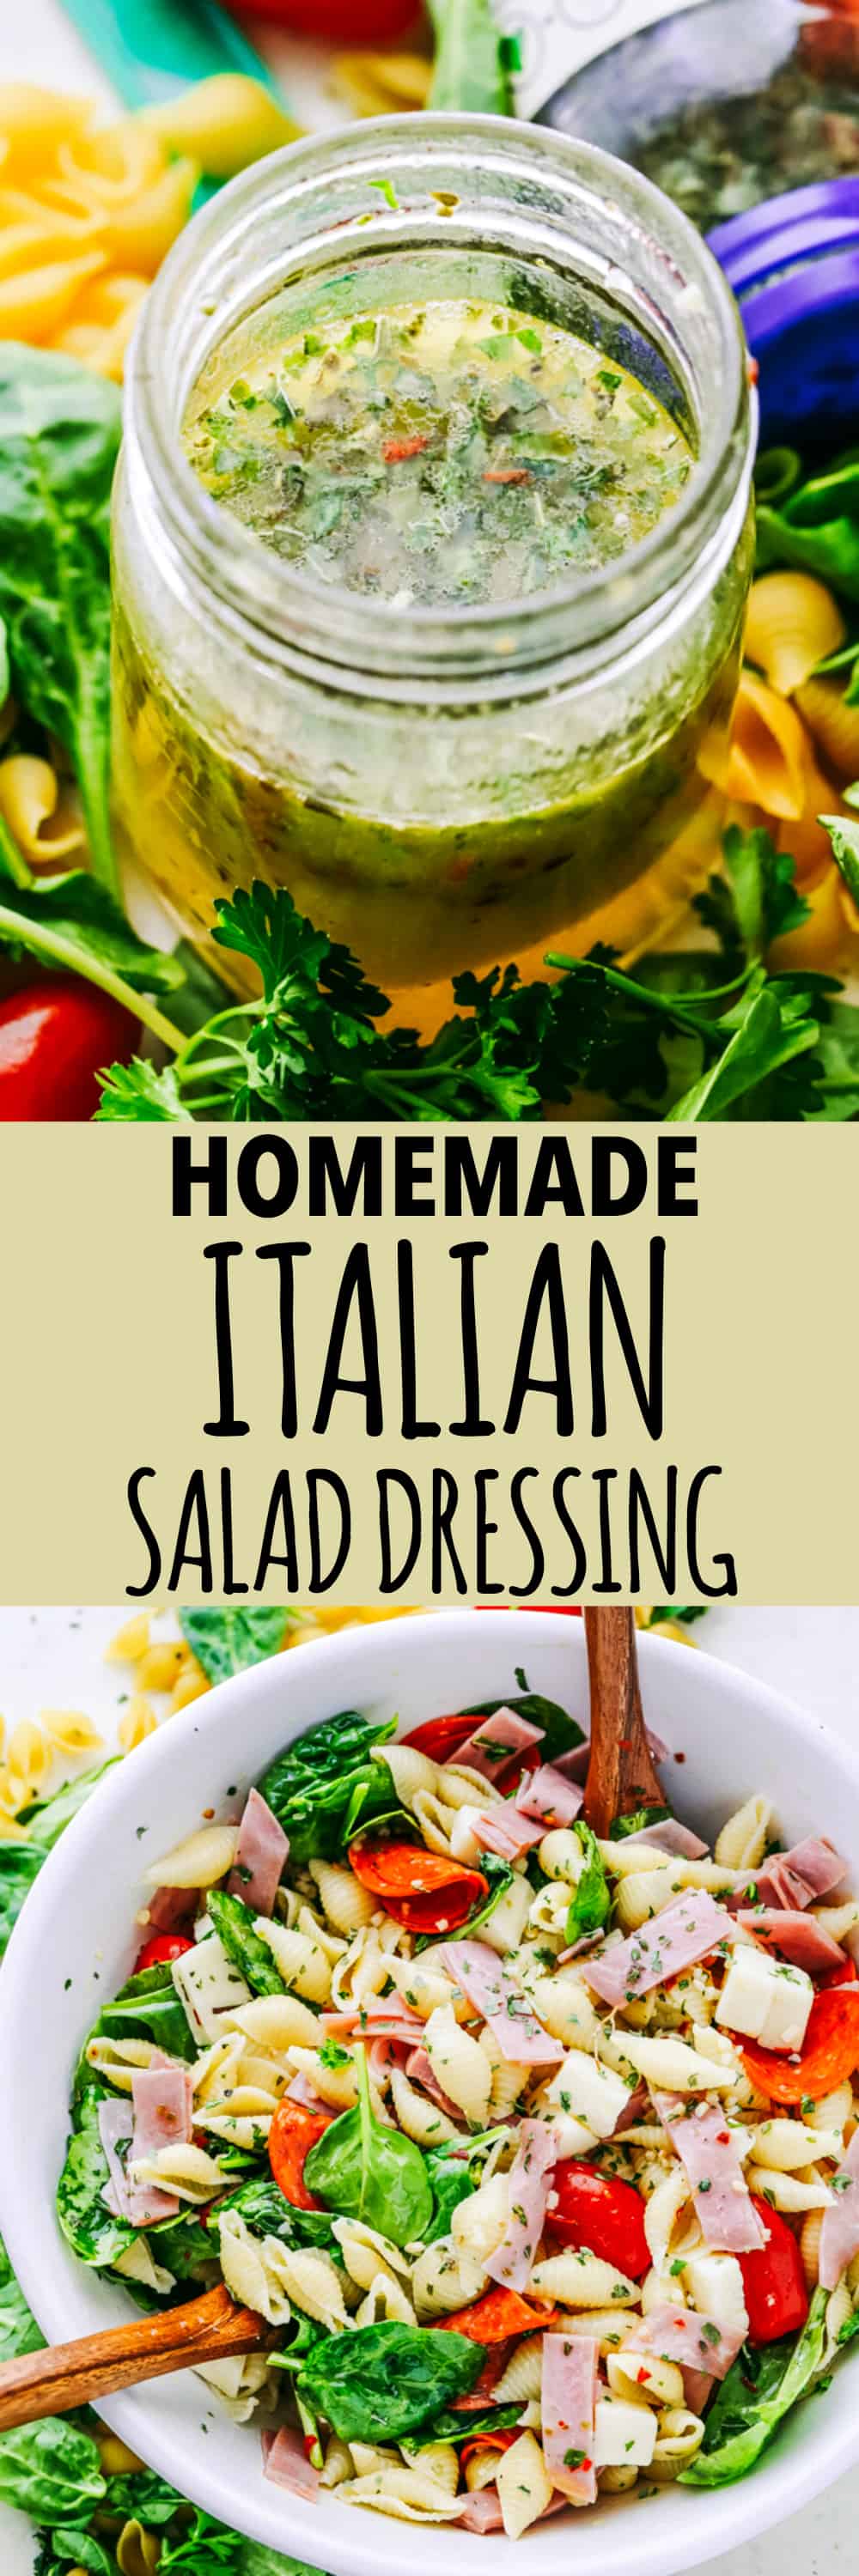 Homemade Italian Salad Dressing - Diethood